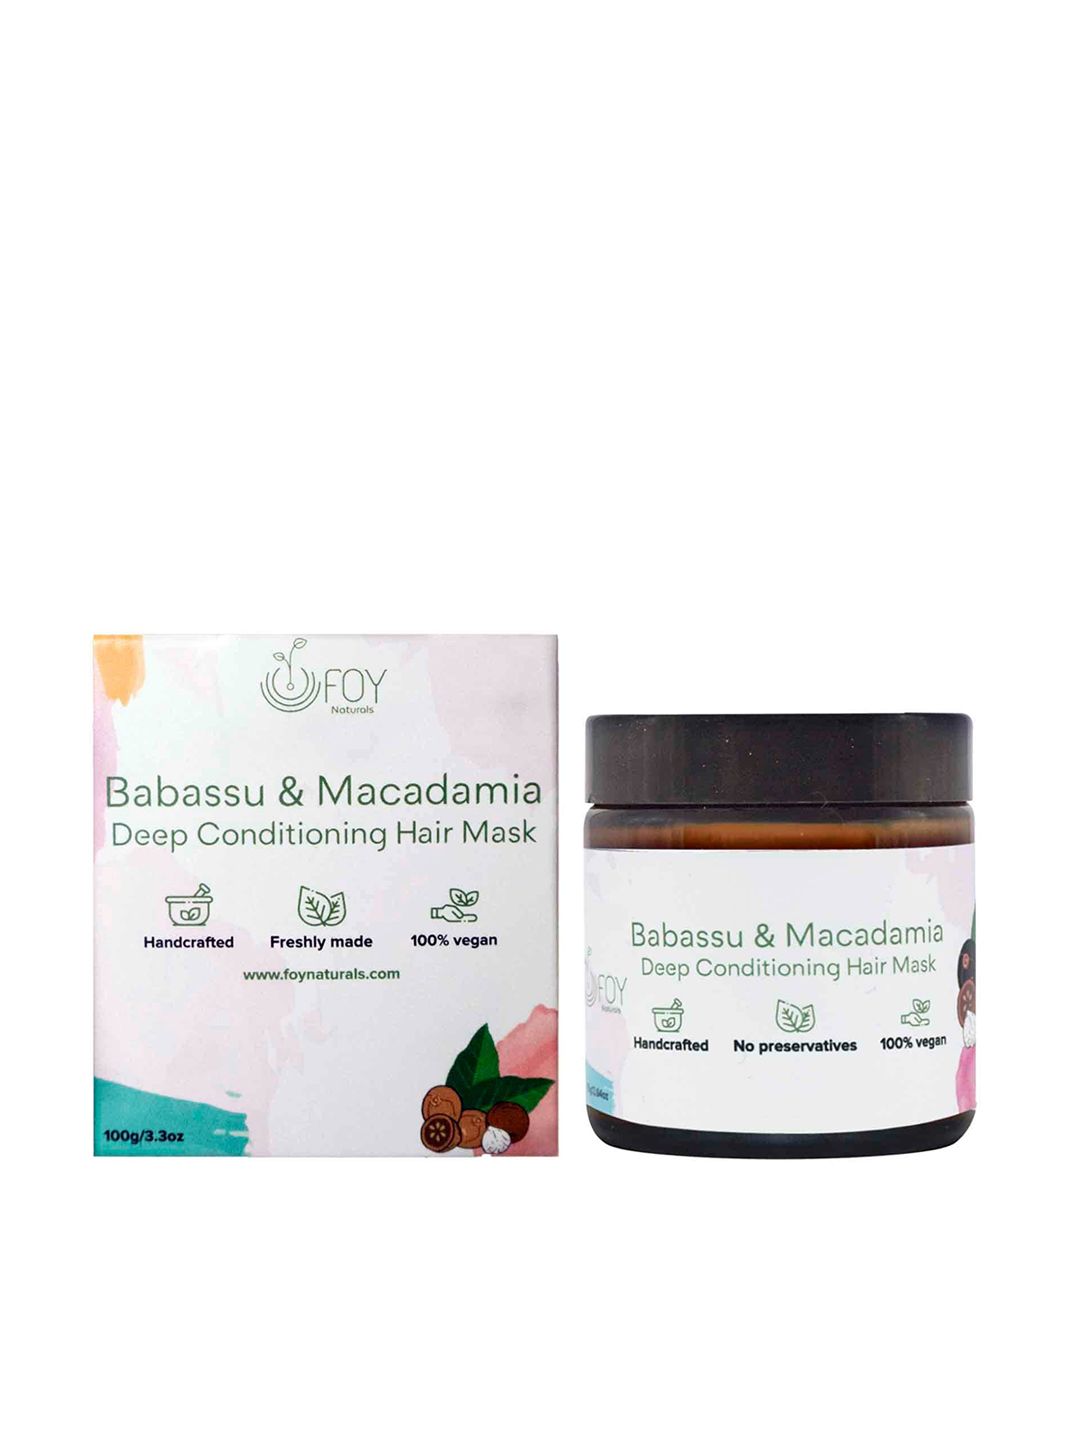 FOY Naturals Unisex Babassu & Macadamia Conditioning Hair Mask 100 g Price in India